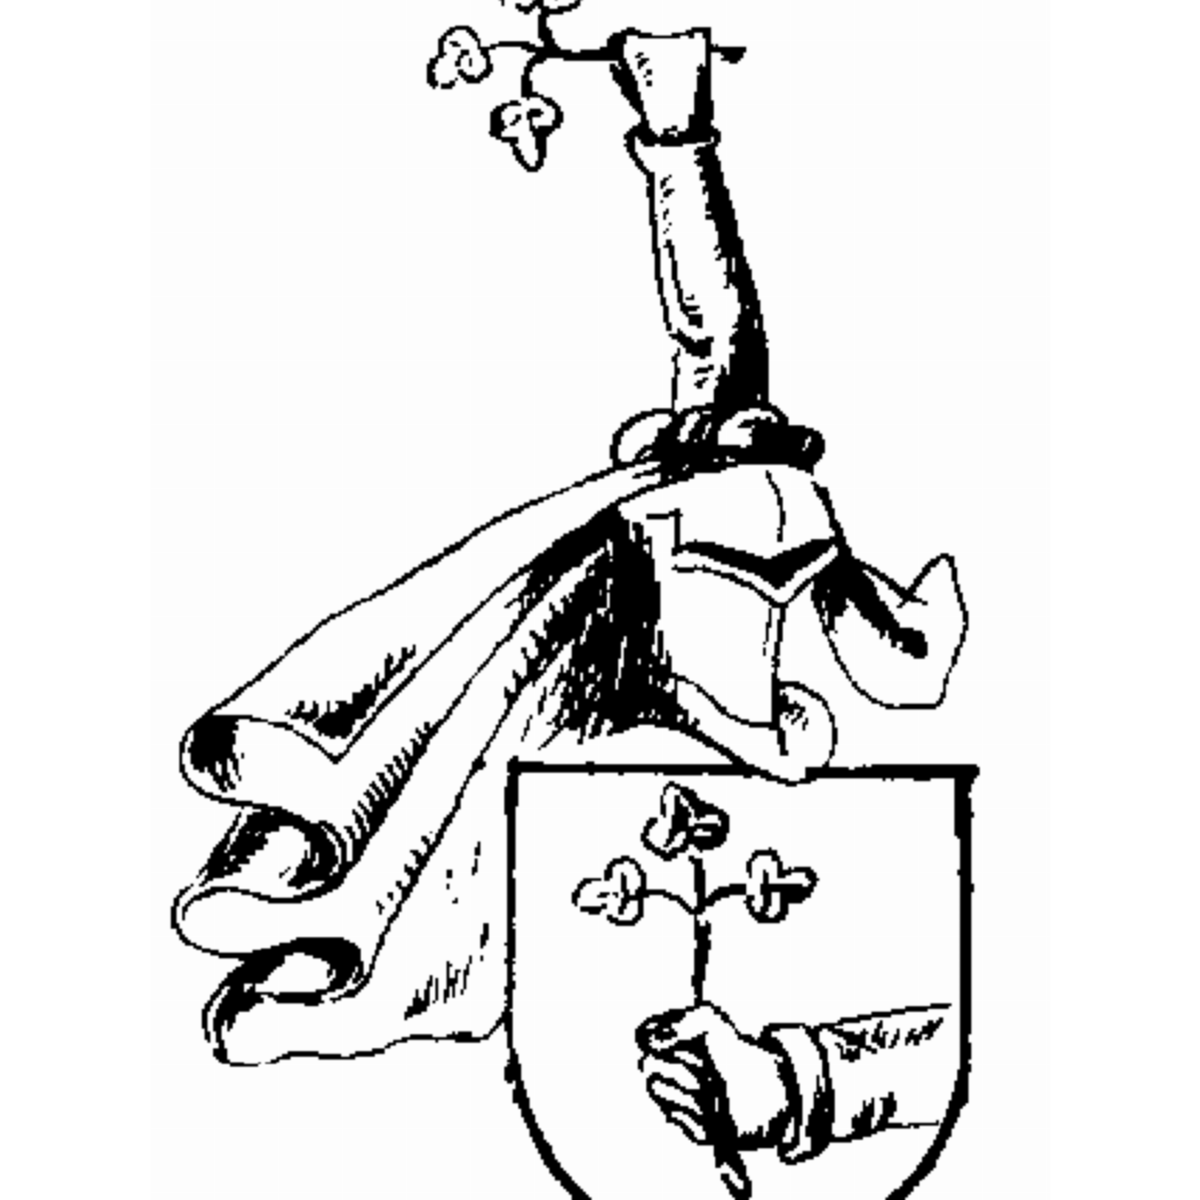 Escudo de la familia Roosen-Runge